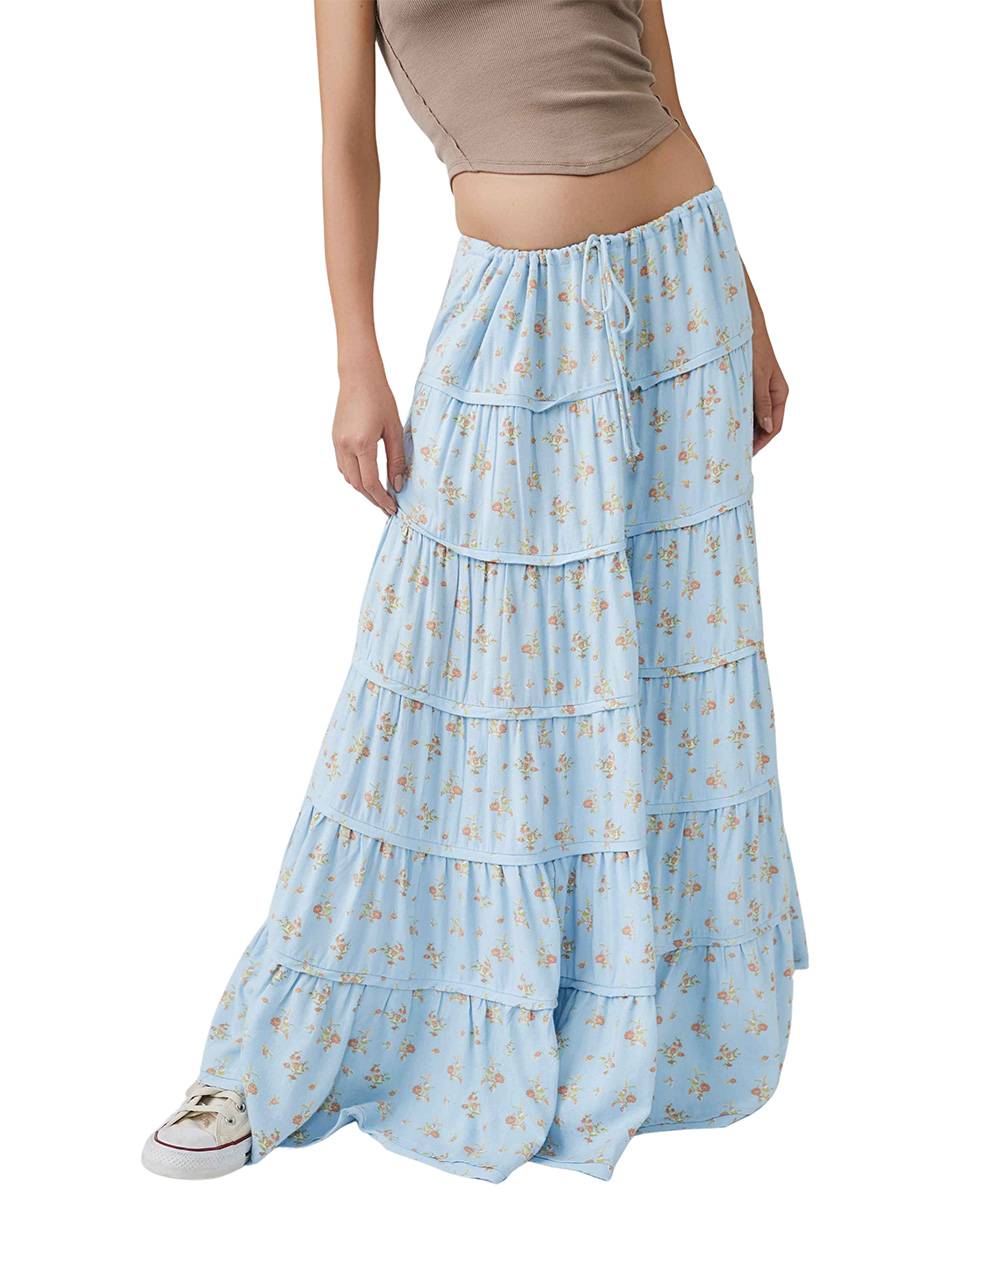 FREE PEOPLE Nova Tiered Maxi Skirt - BLUE COMBO | Tillys